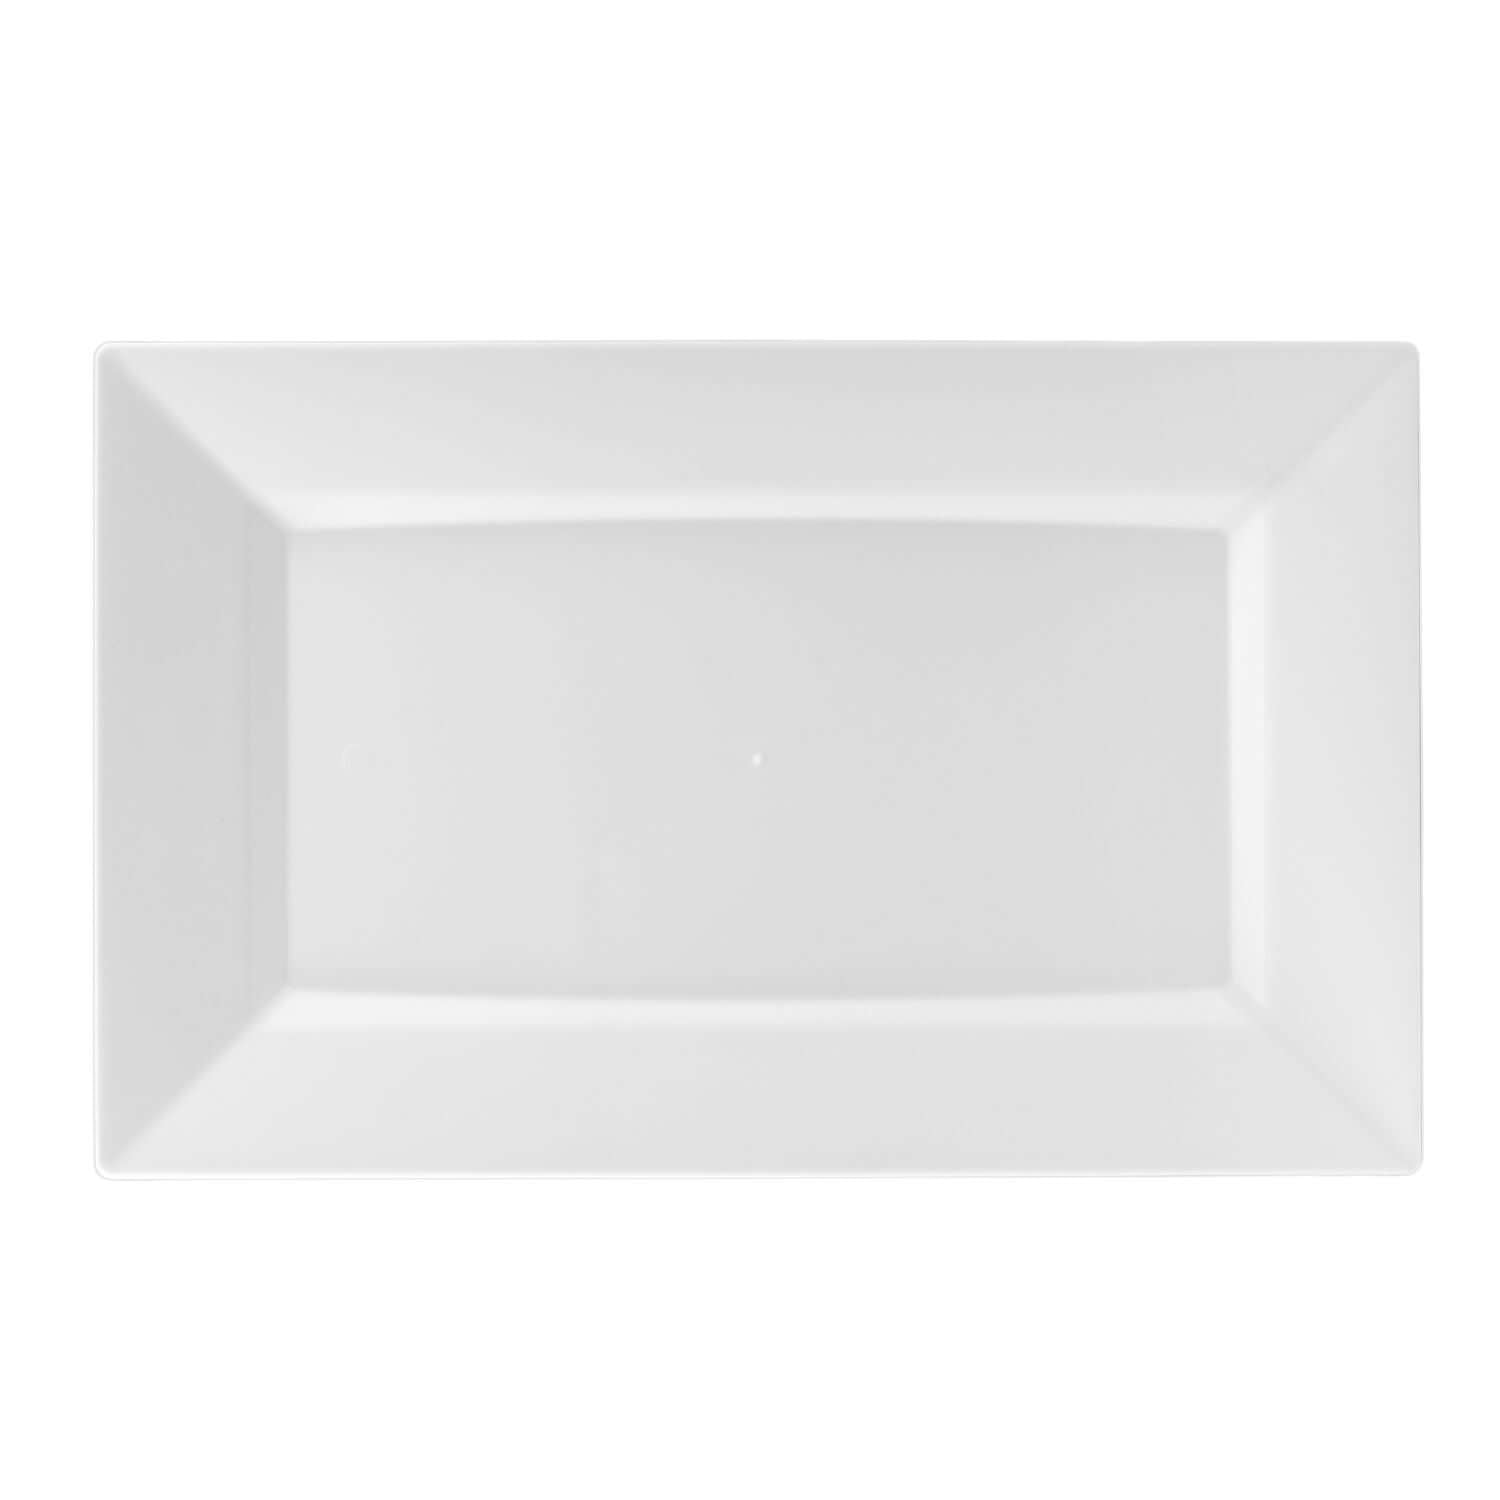 12.75" White Rectangular Plastic Plates (120 Count) - Yom Tov Settings